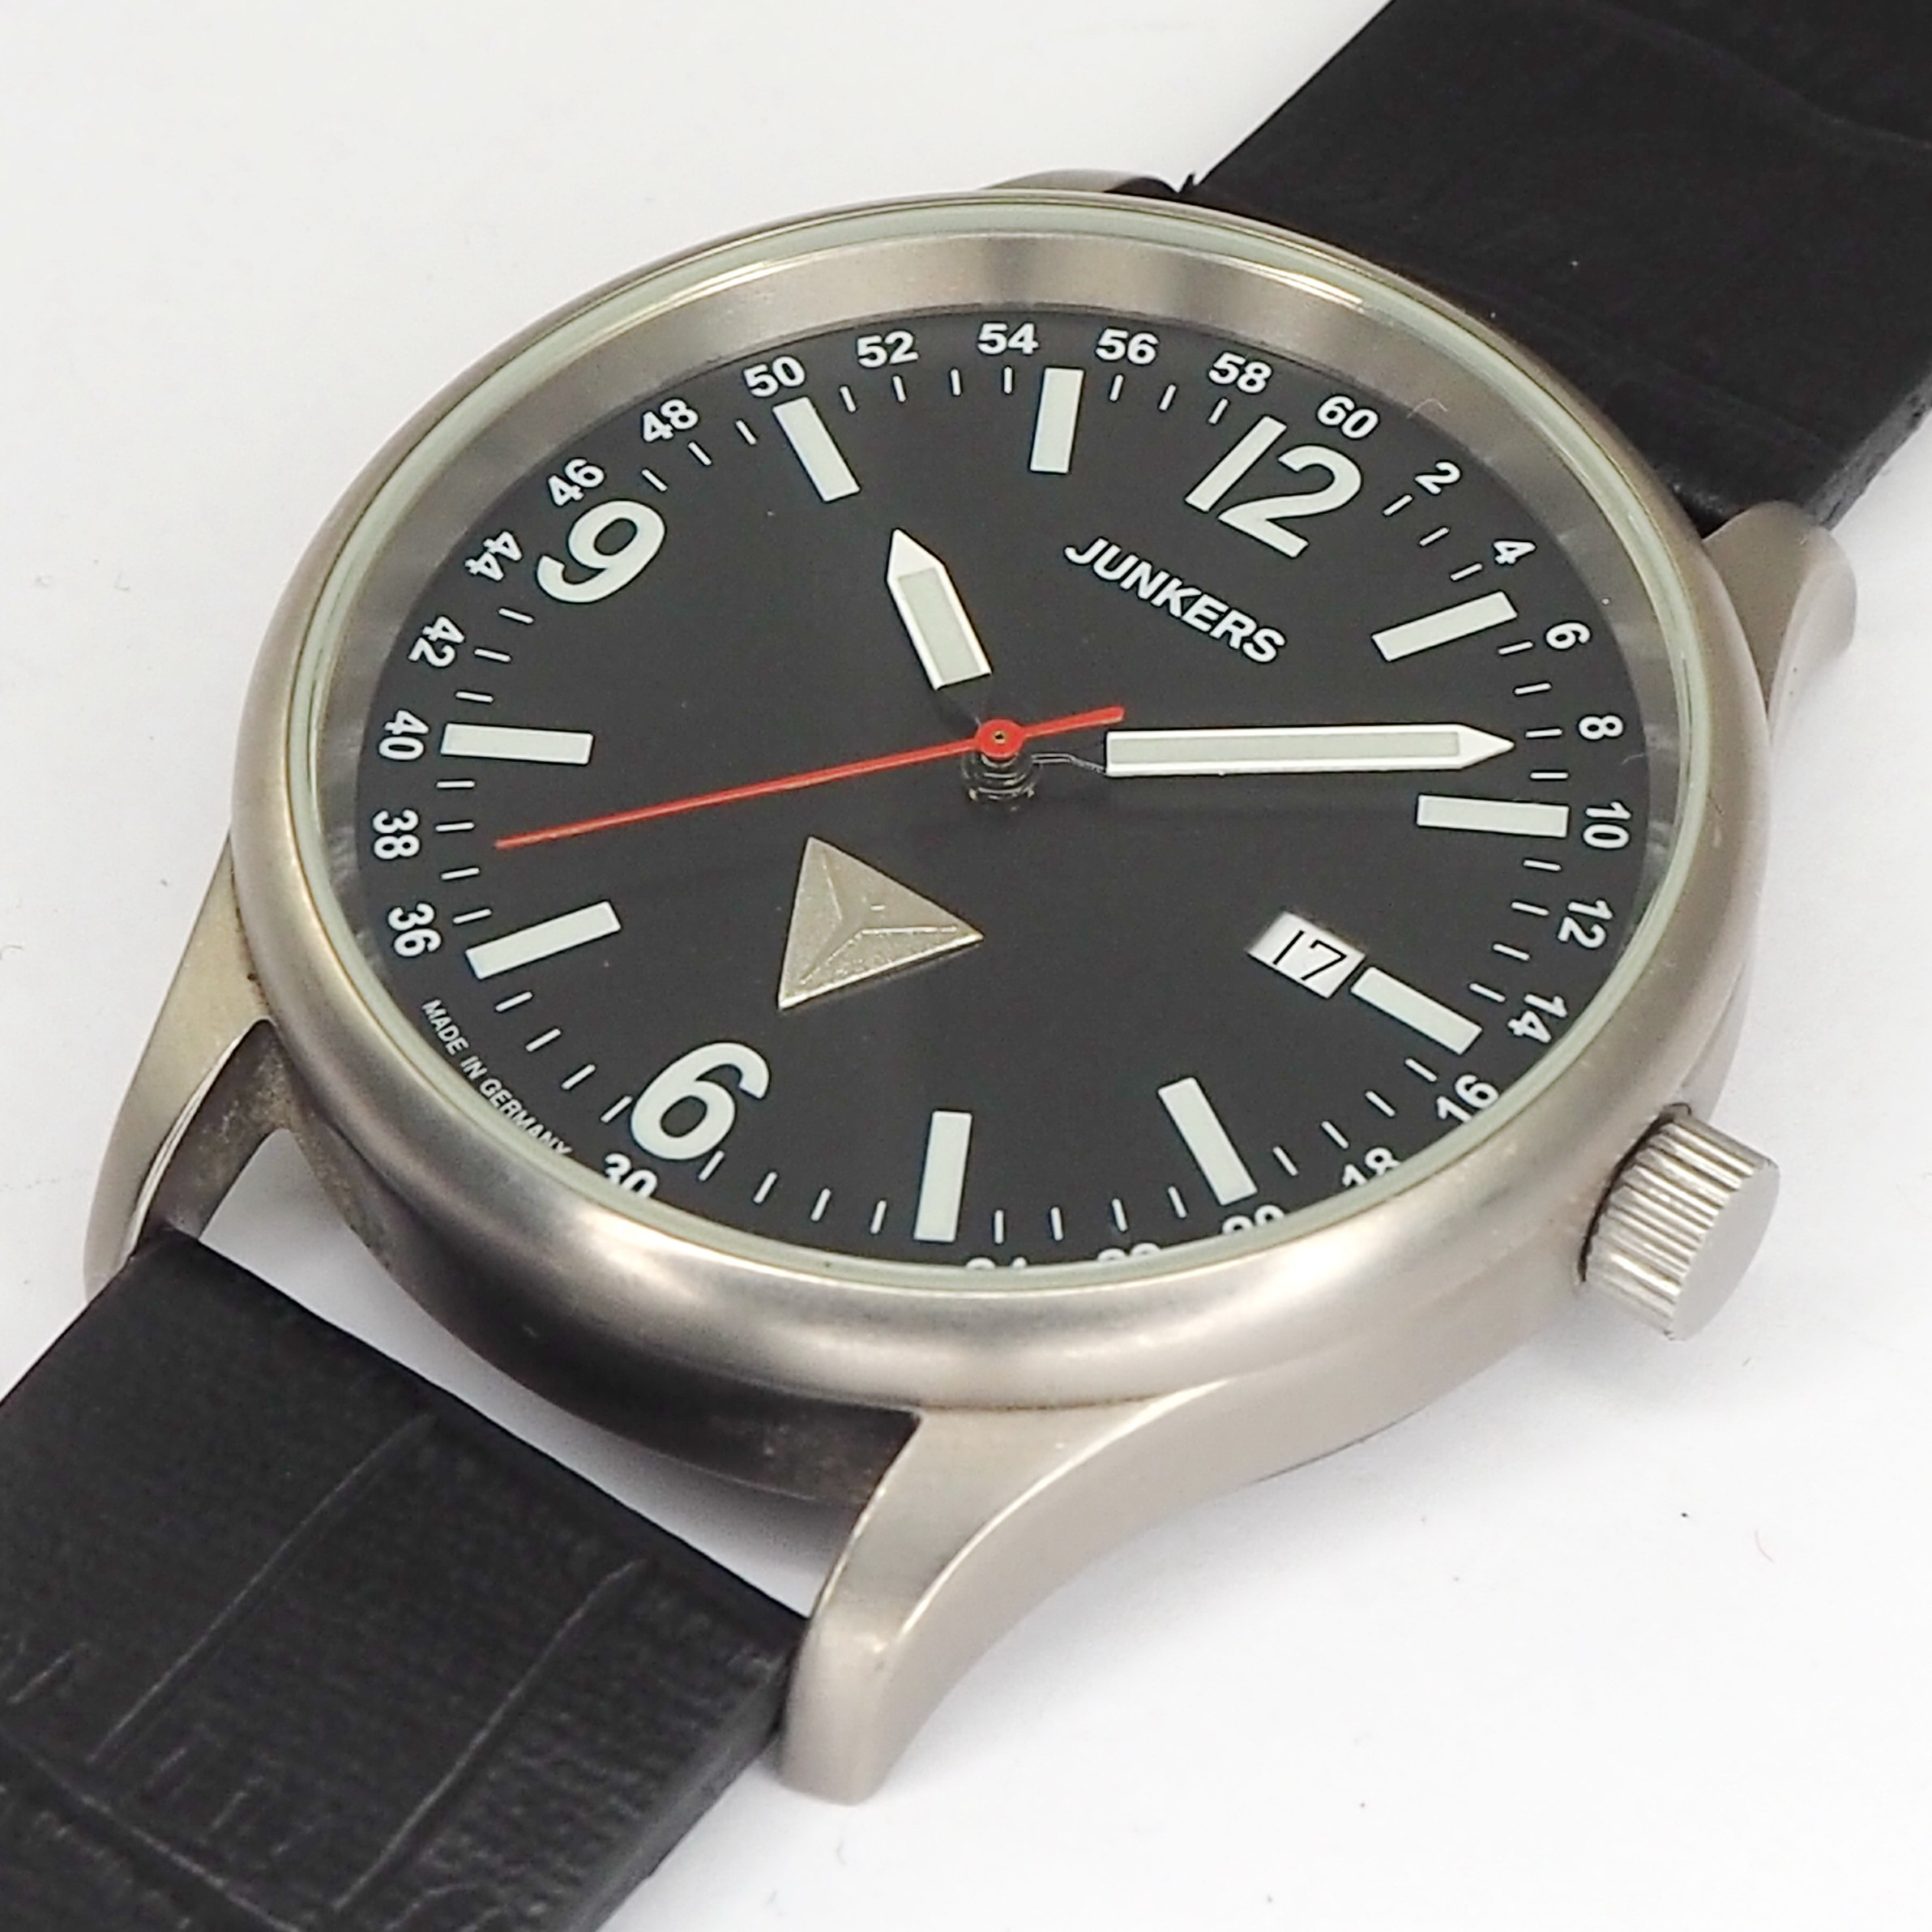 Junkers Titan Herren Automatik Armbanduhr - Ref. 6270 von Anfang 2000er